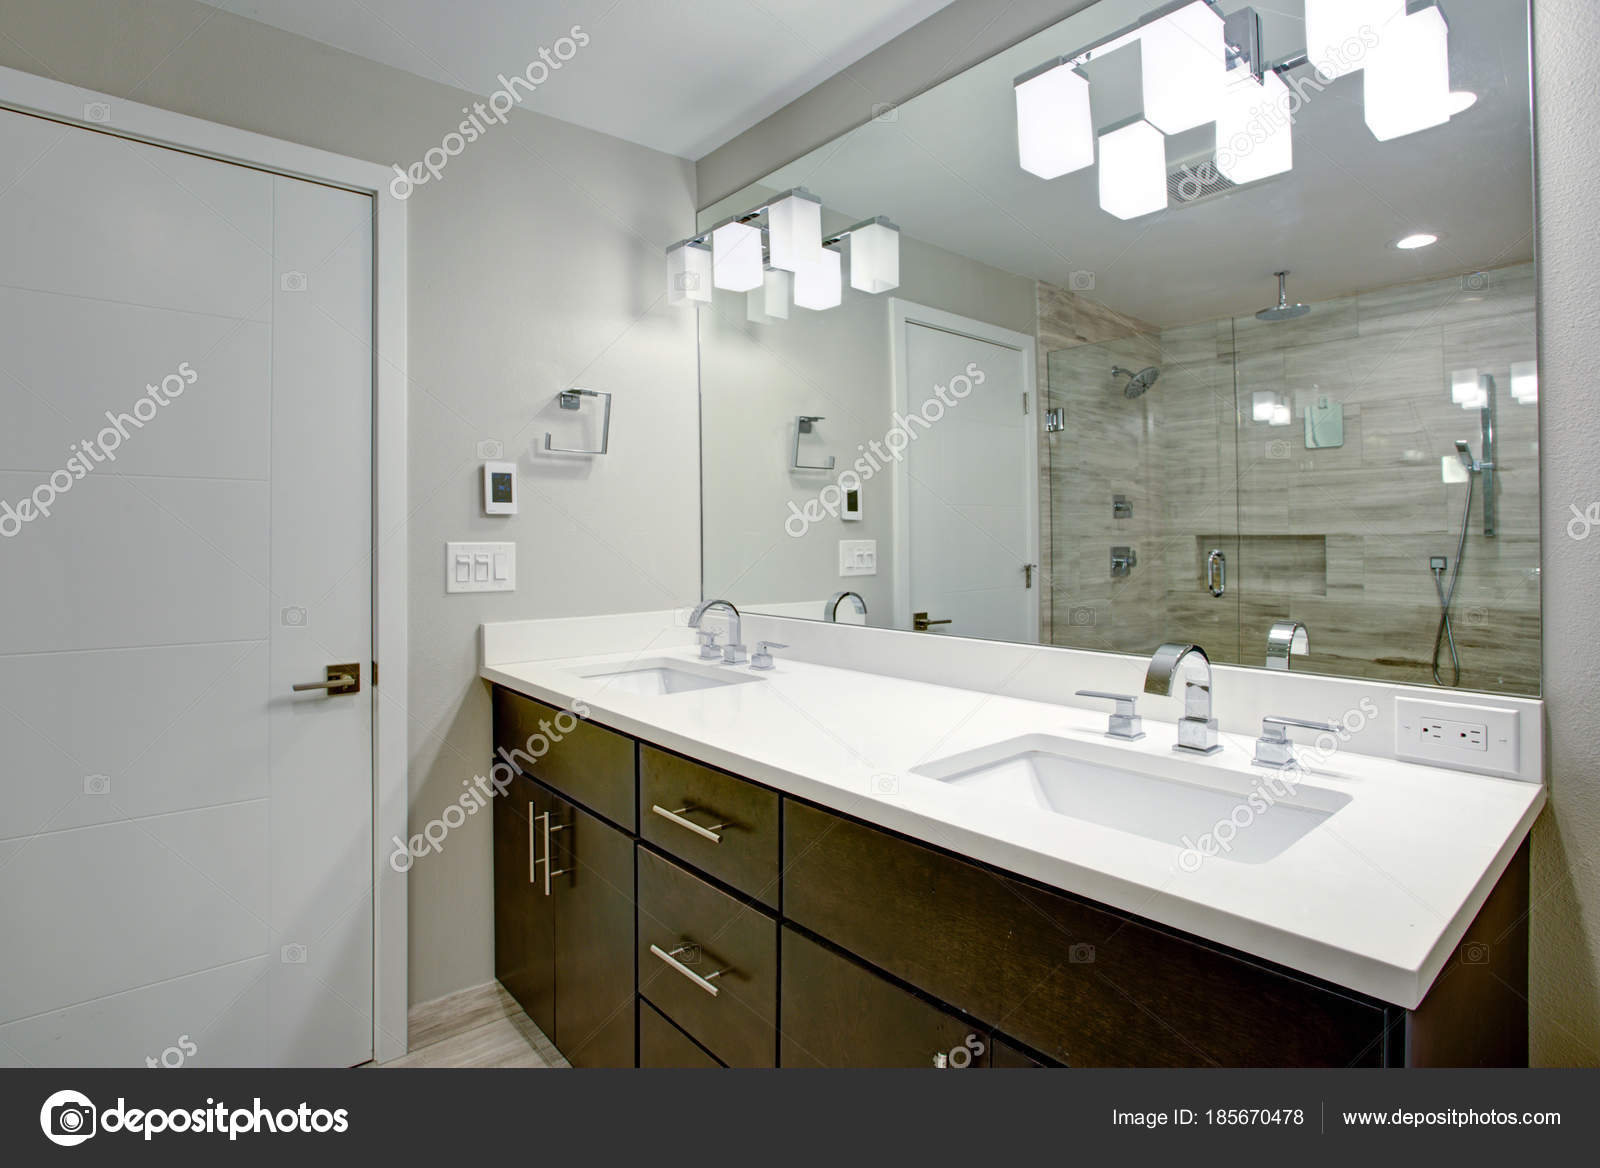 Elegant Bathroom With Espresso Double, Espresso Double Vanity Bathroom